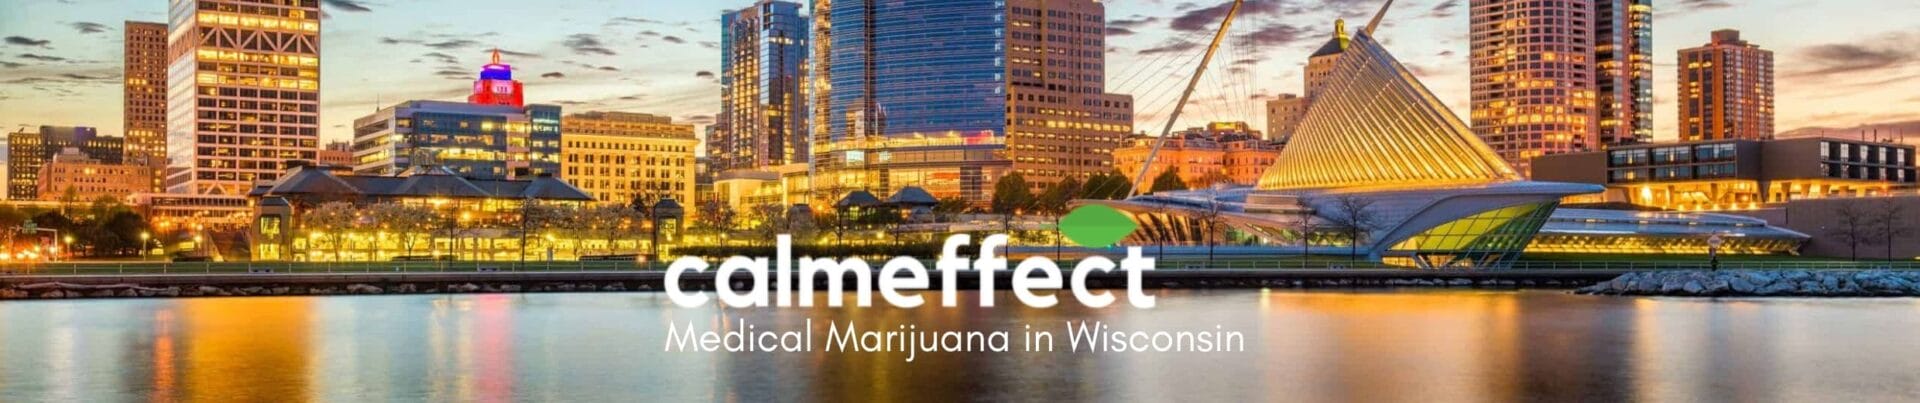 Medical Marijuana in Wisconsin